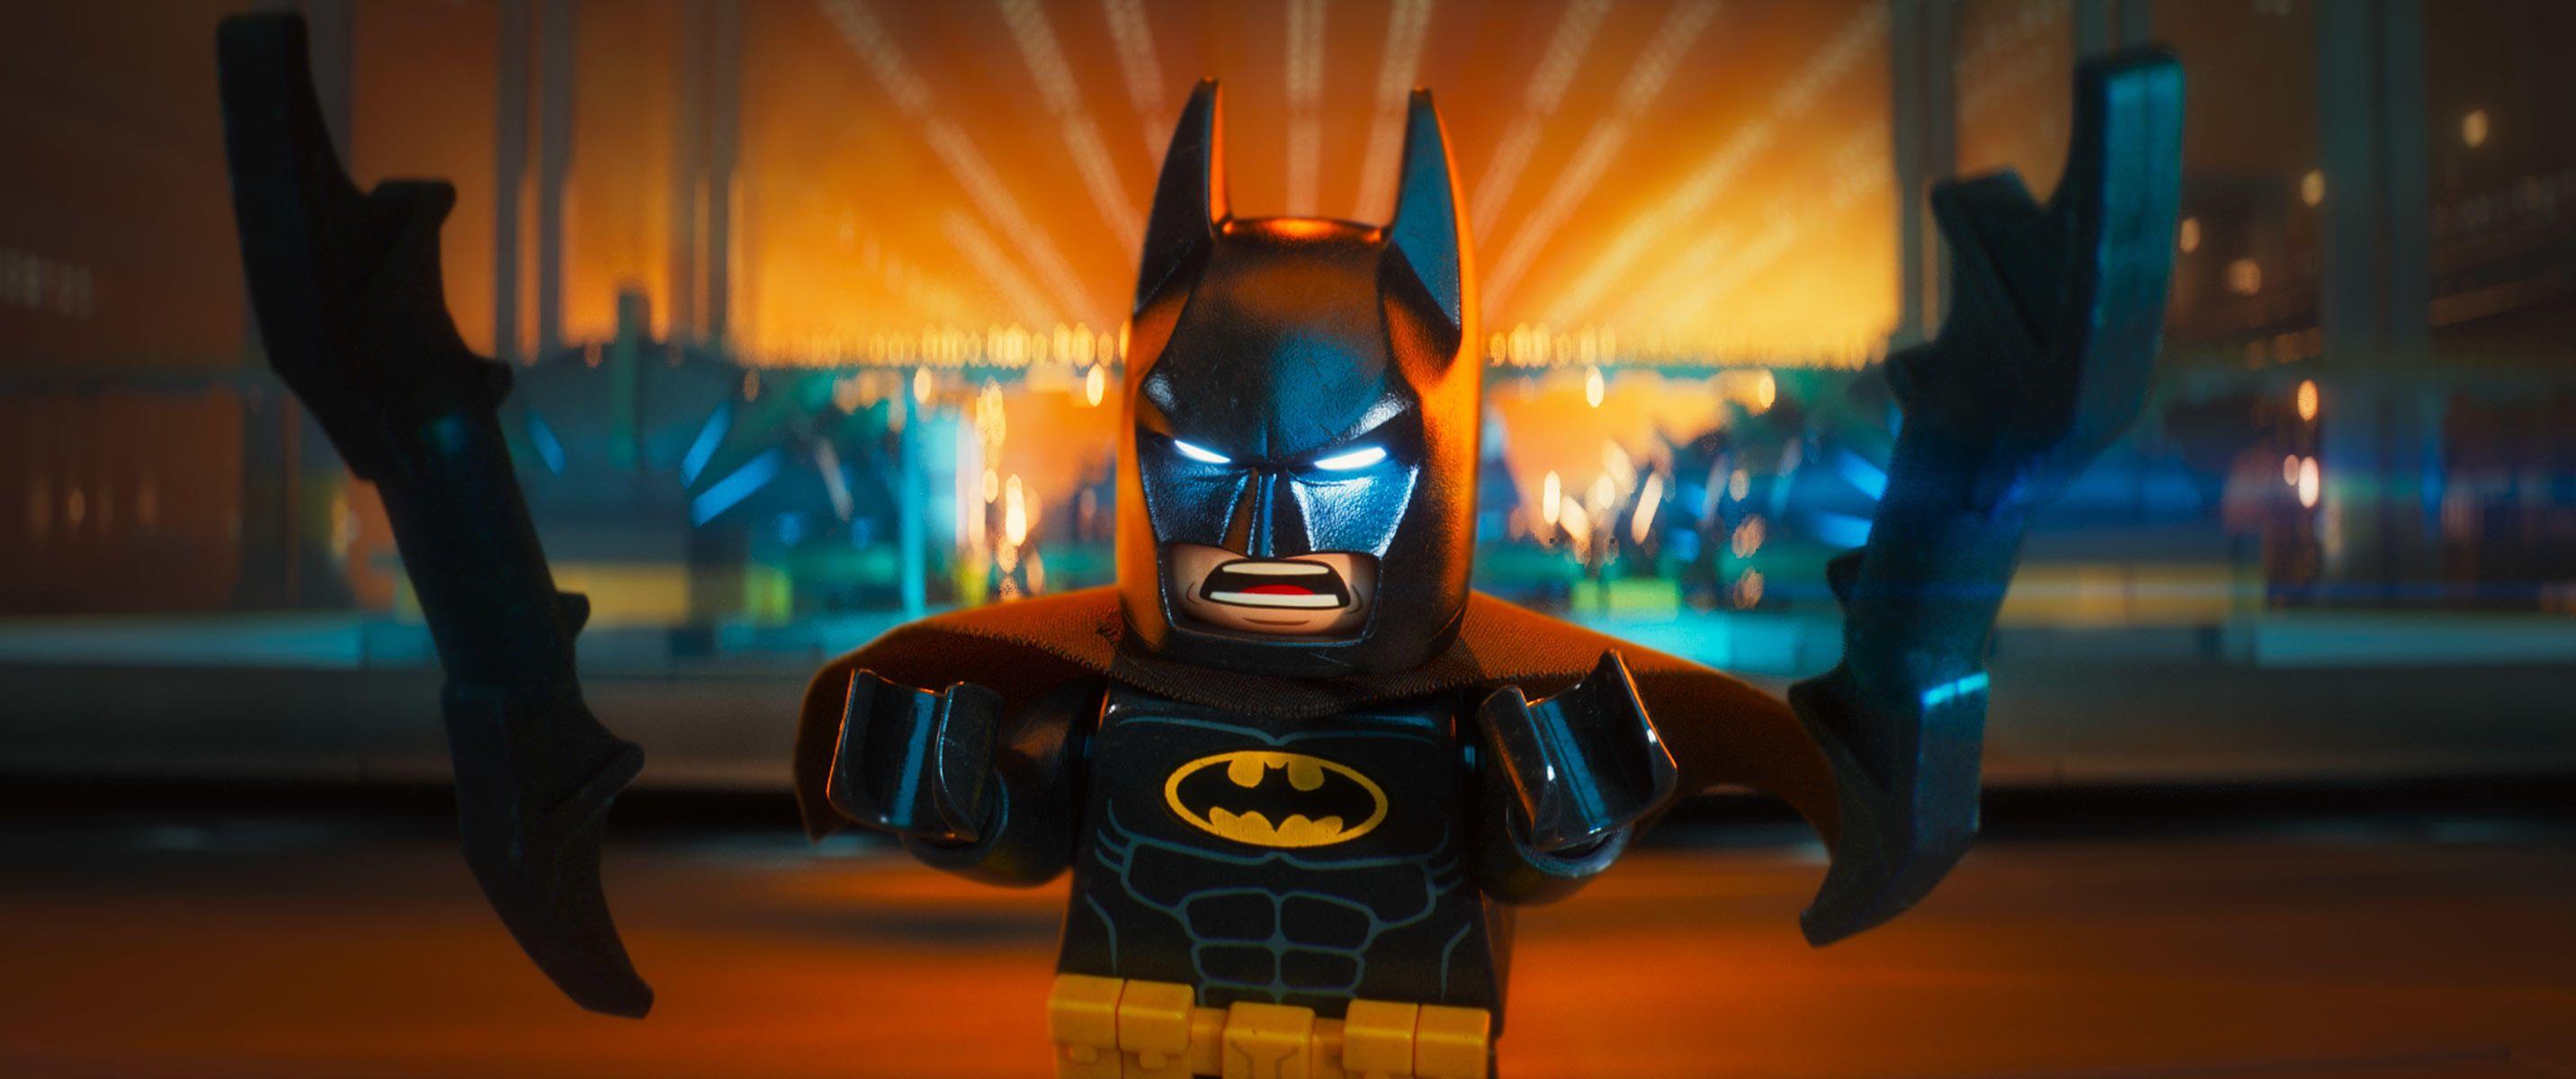 The Lego Batman Movie Wallpaper HD 2016 In The Lego Batman Movie